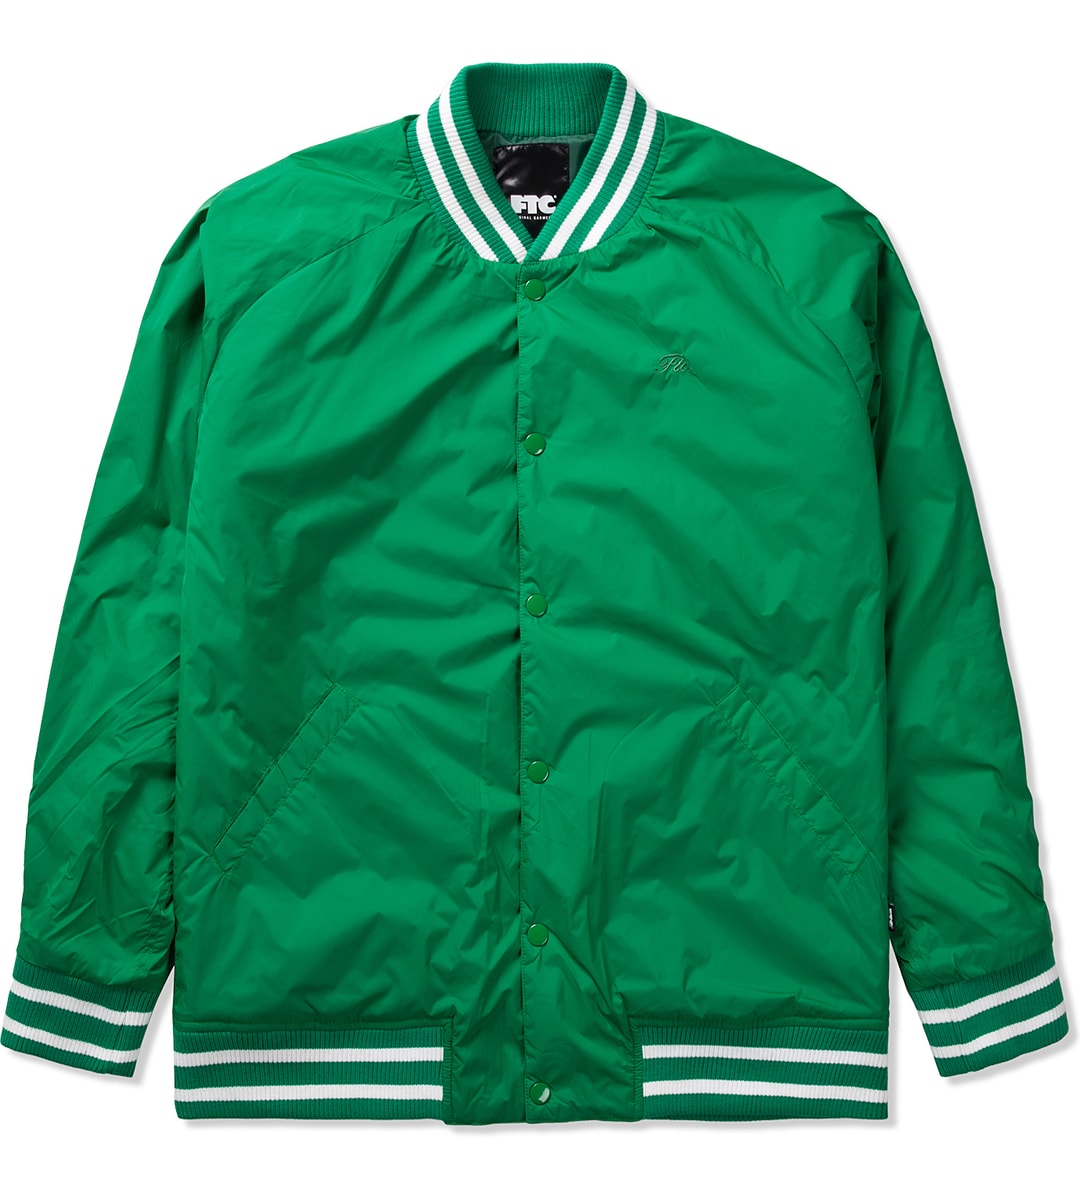 FTC - Green Nylon Varsity Jacket | HBX - Globally Curated Fashion and ...